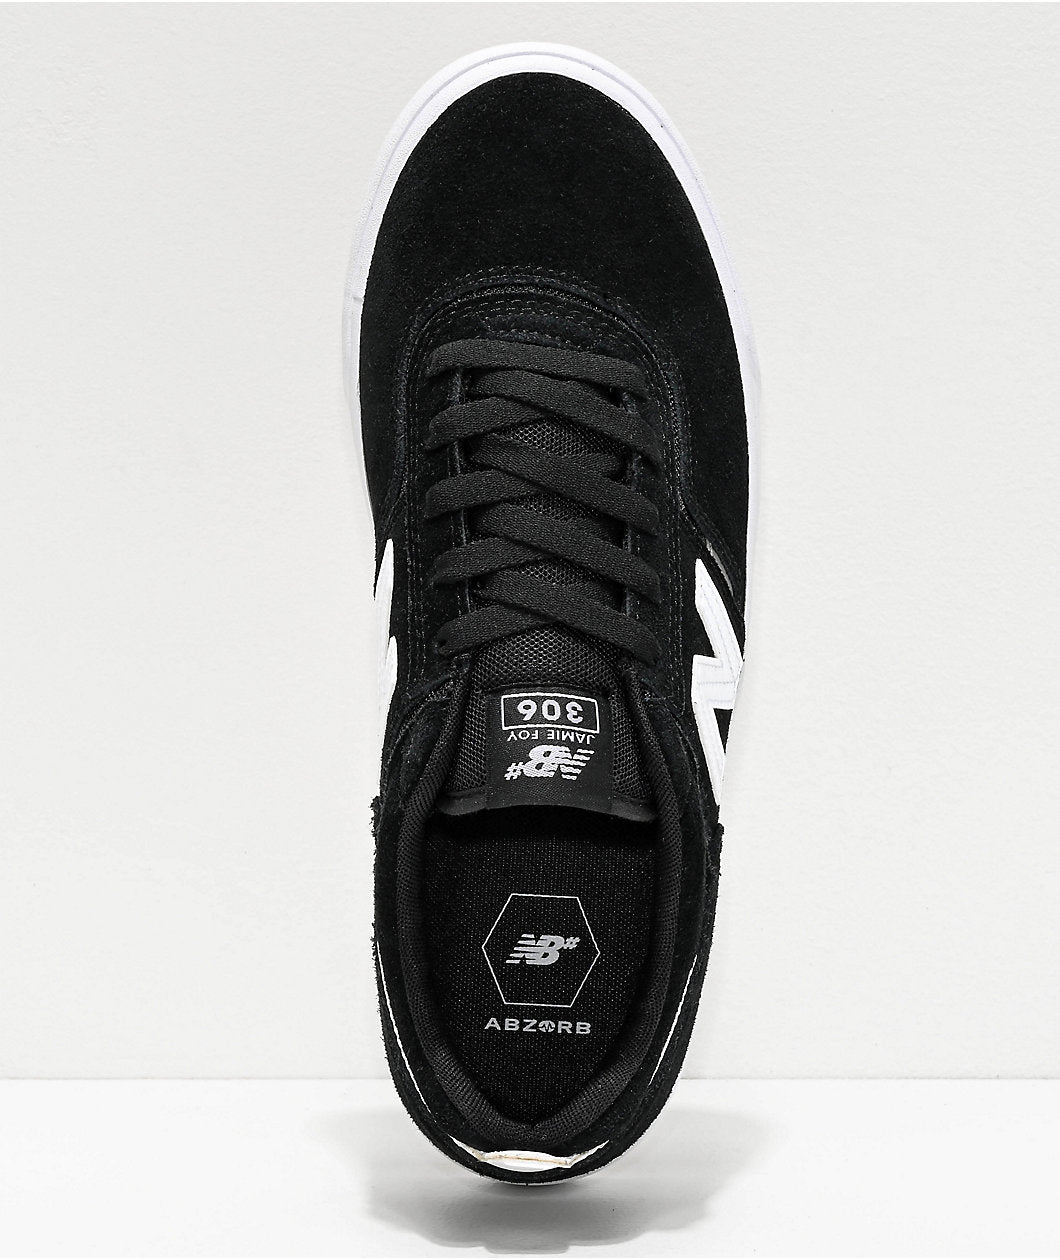 306 Foy Shoe - Black/White